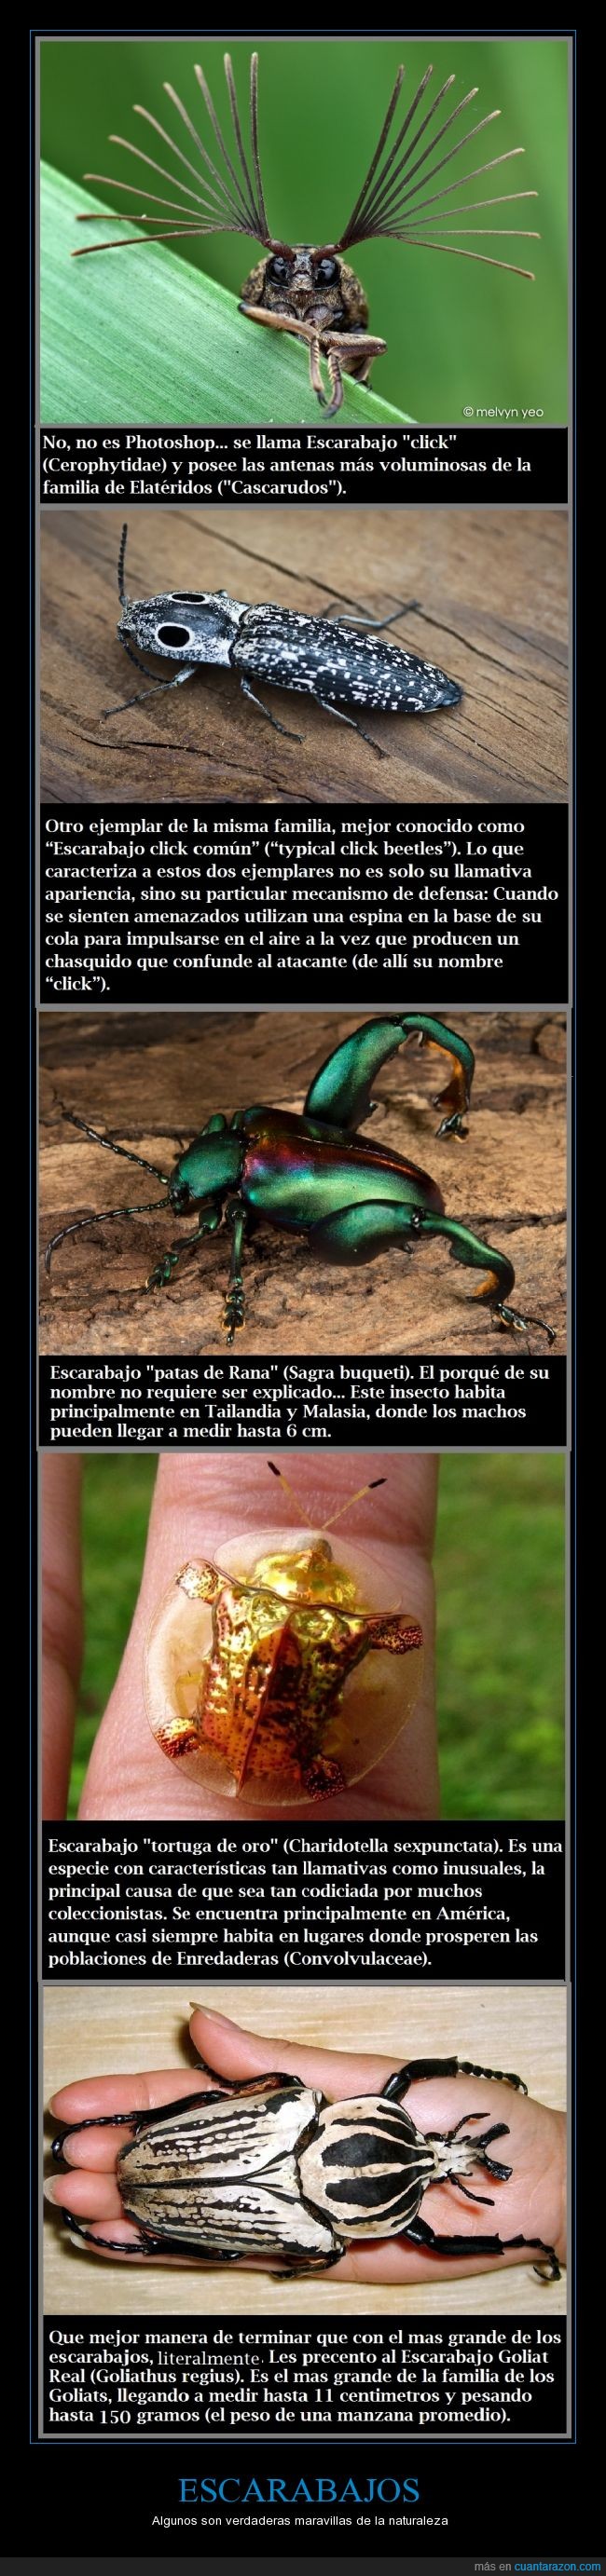 naturaleza,escarabajo tortuga de oro,escarabajo goliat,escarabajo clic,escarabajo,escarabajo patas de rana,insectos